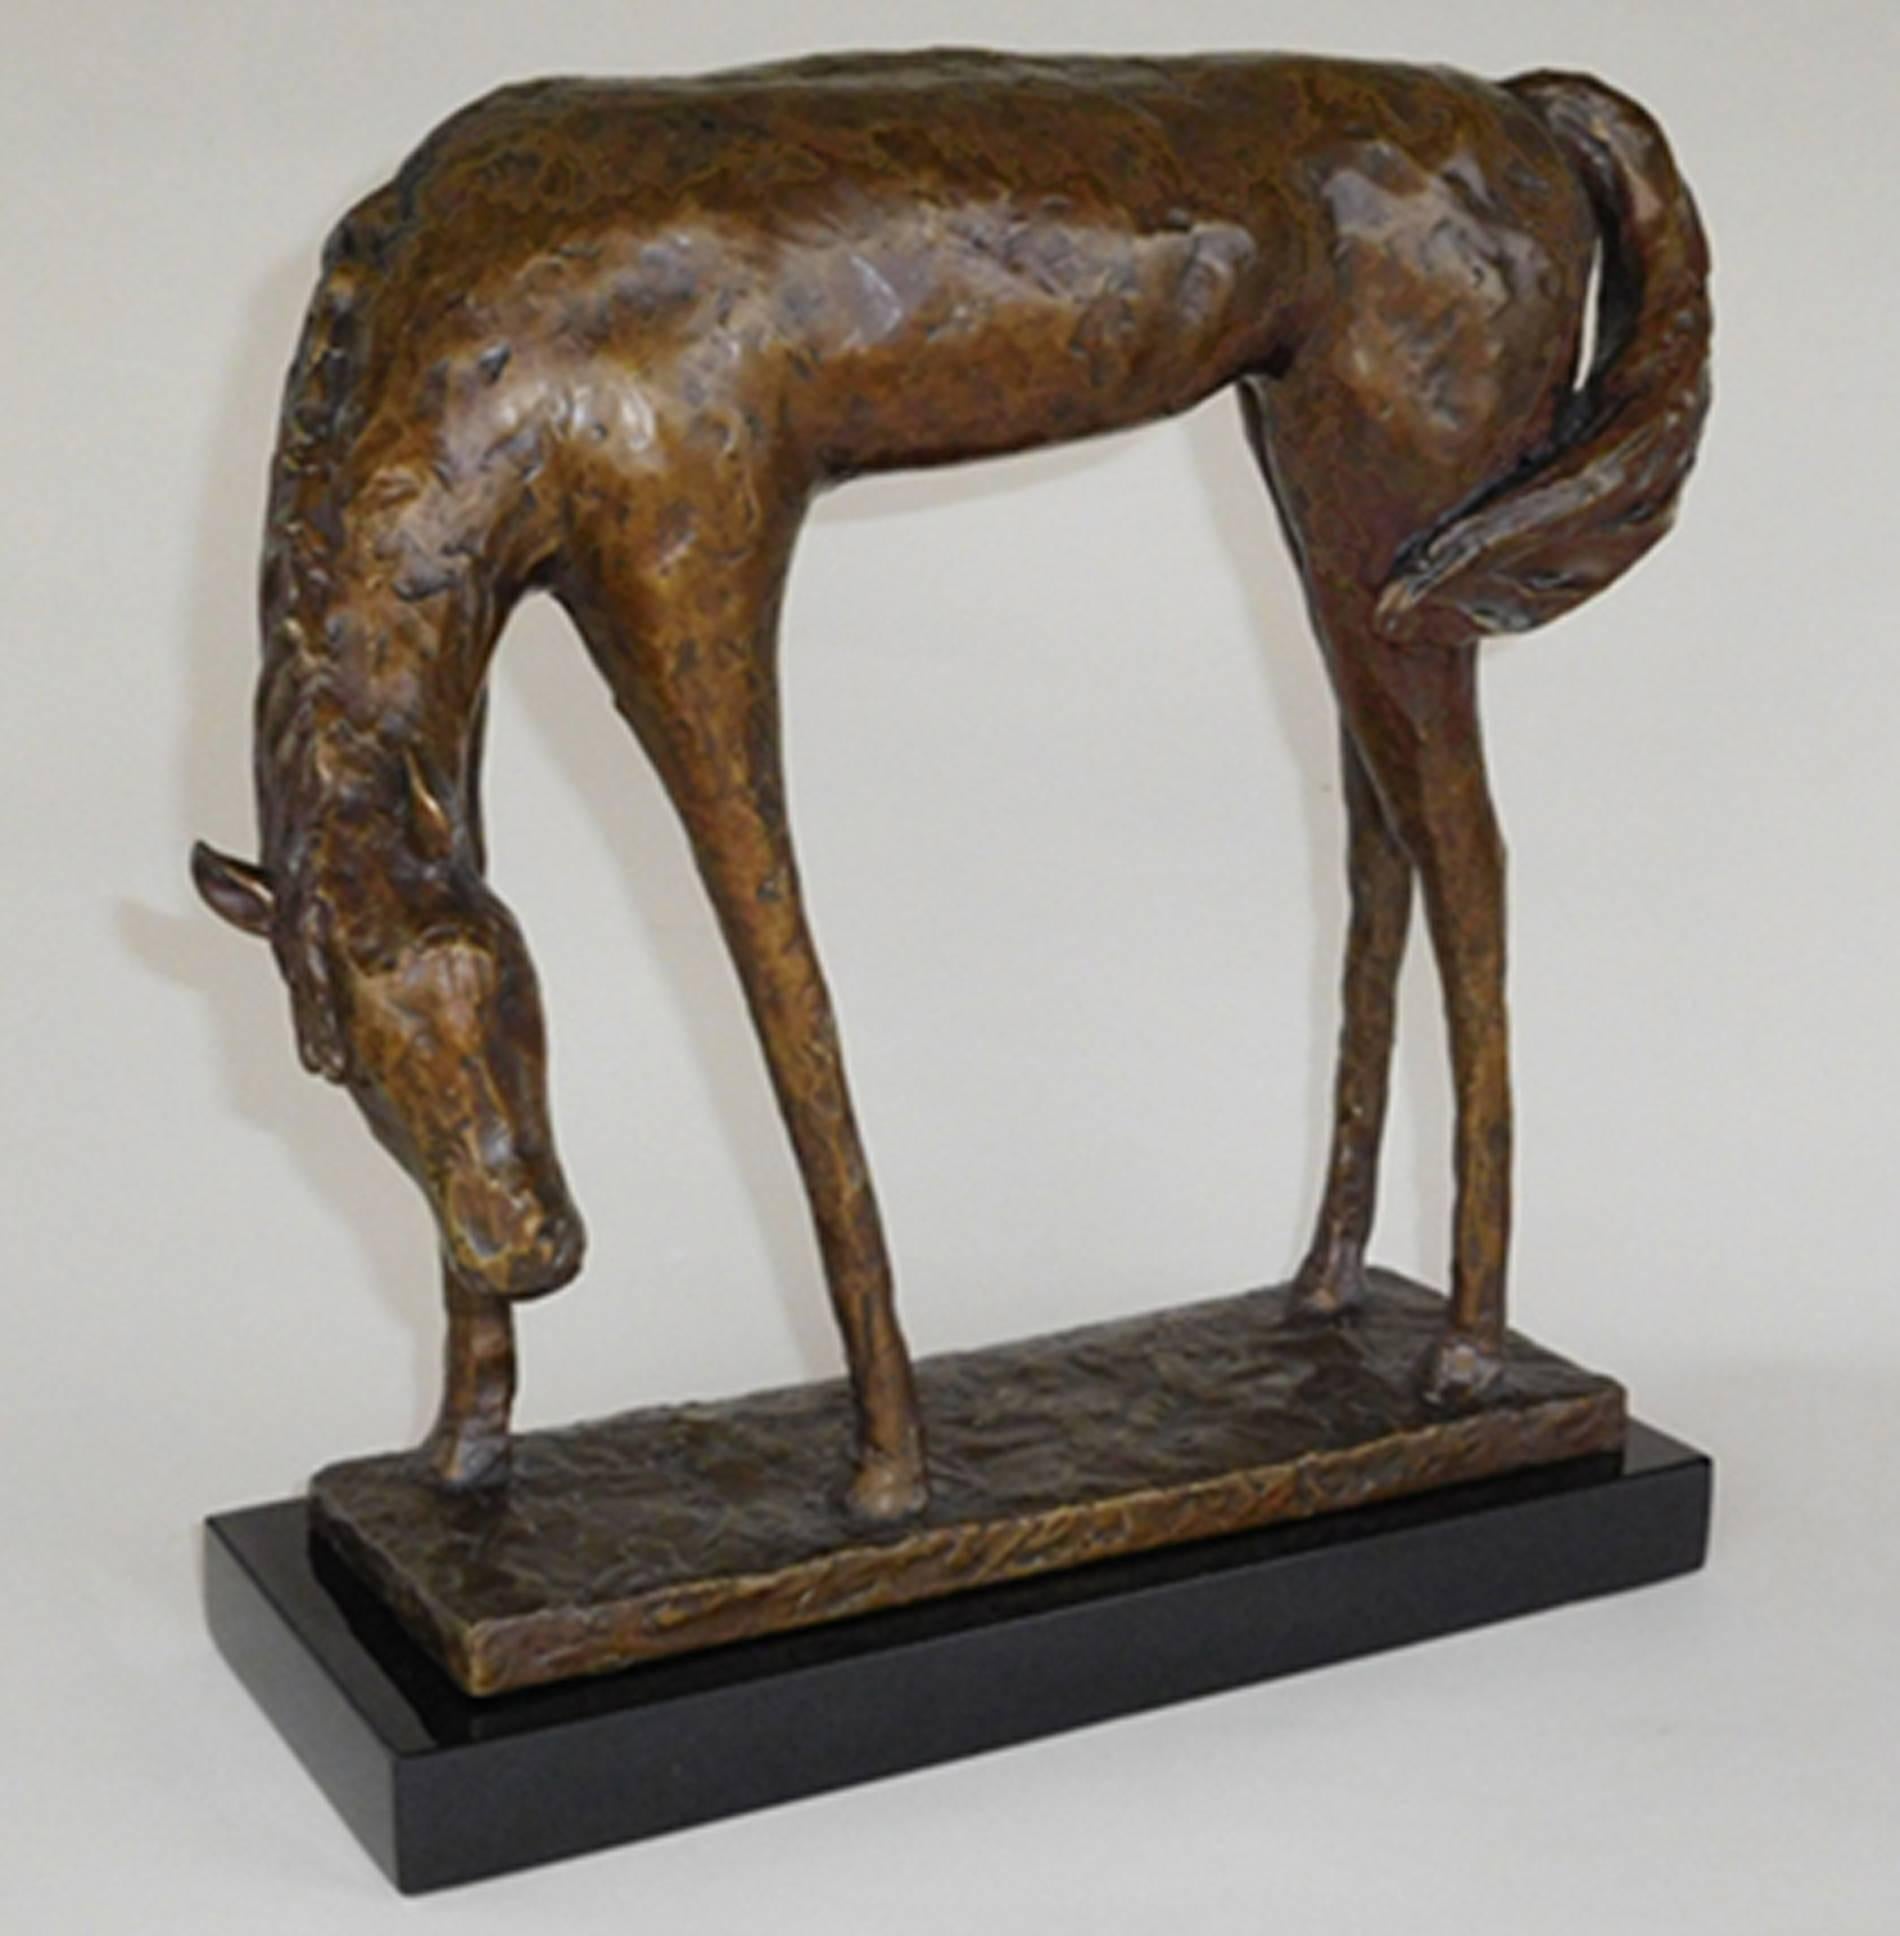 Paula Blackman Figurative Sculpture - Horse (Bronze Sculpture) small edition 2017